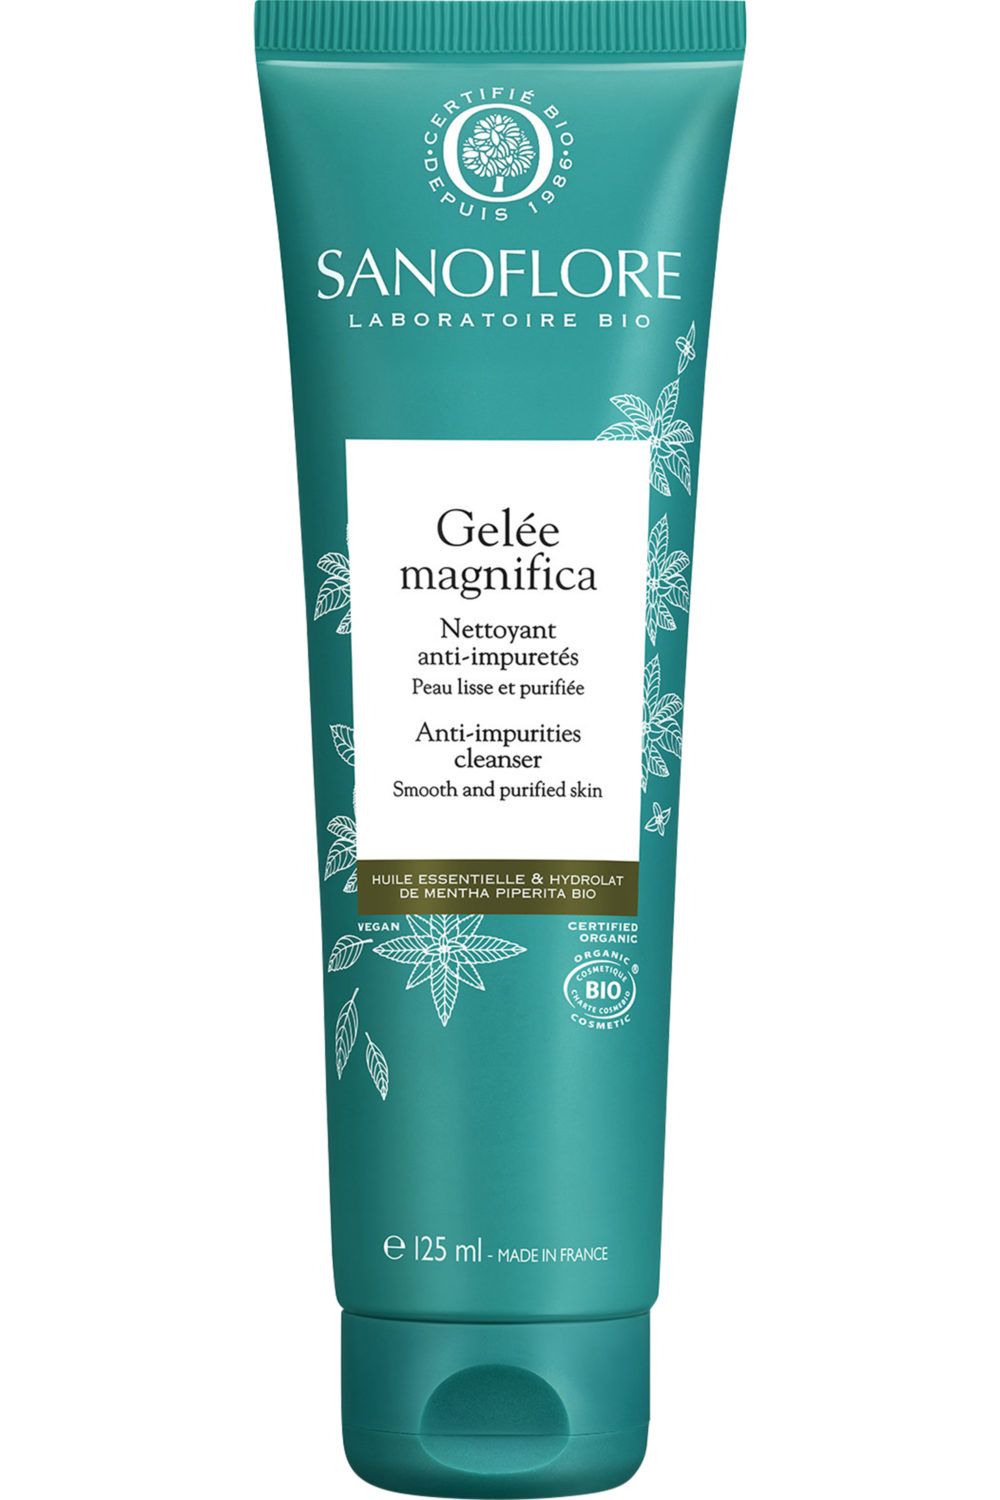 Sanoflore - New Gelée Magnifica 125 ml